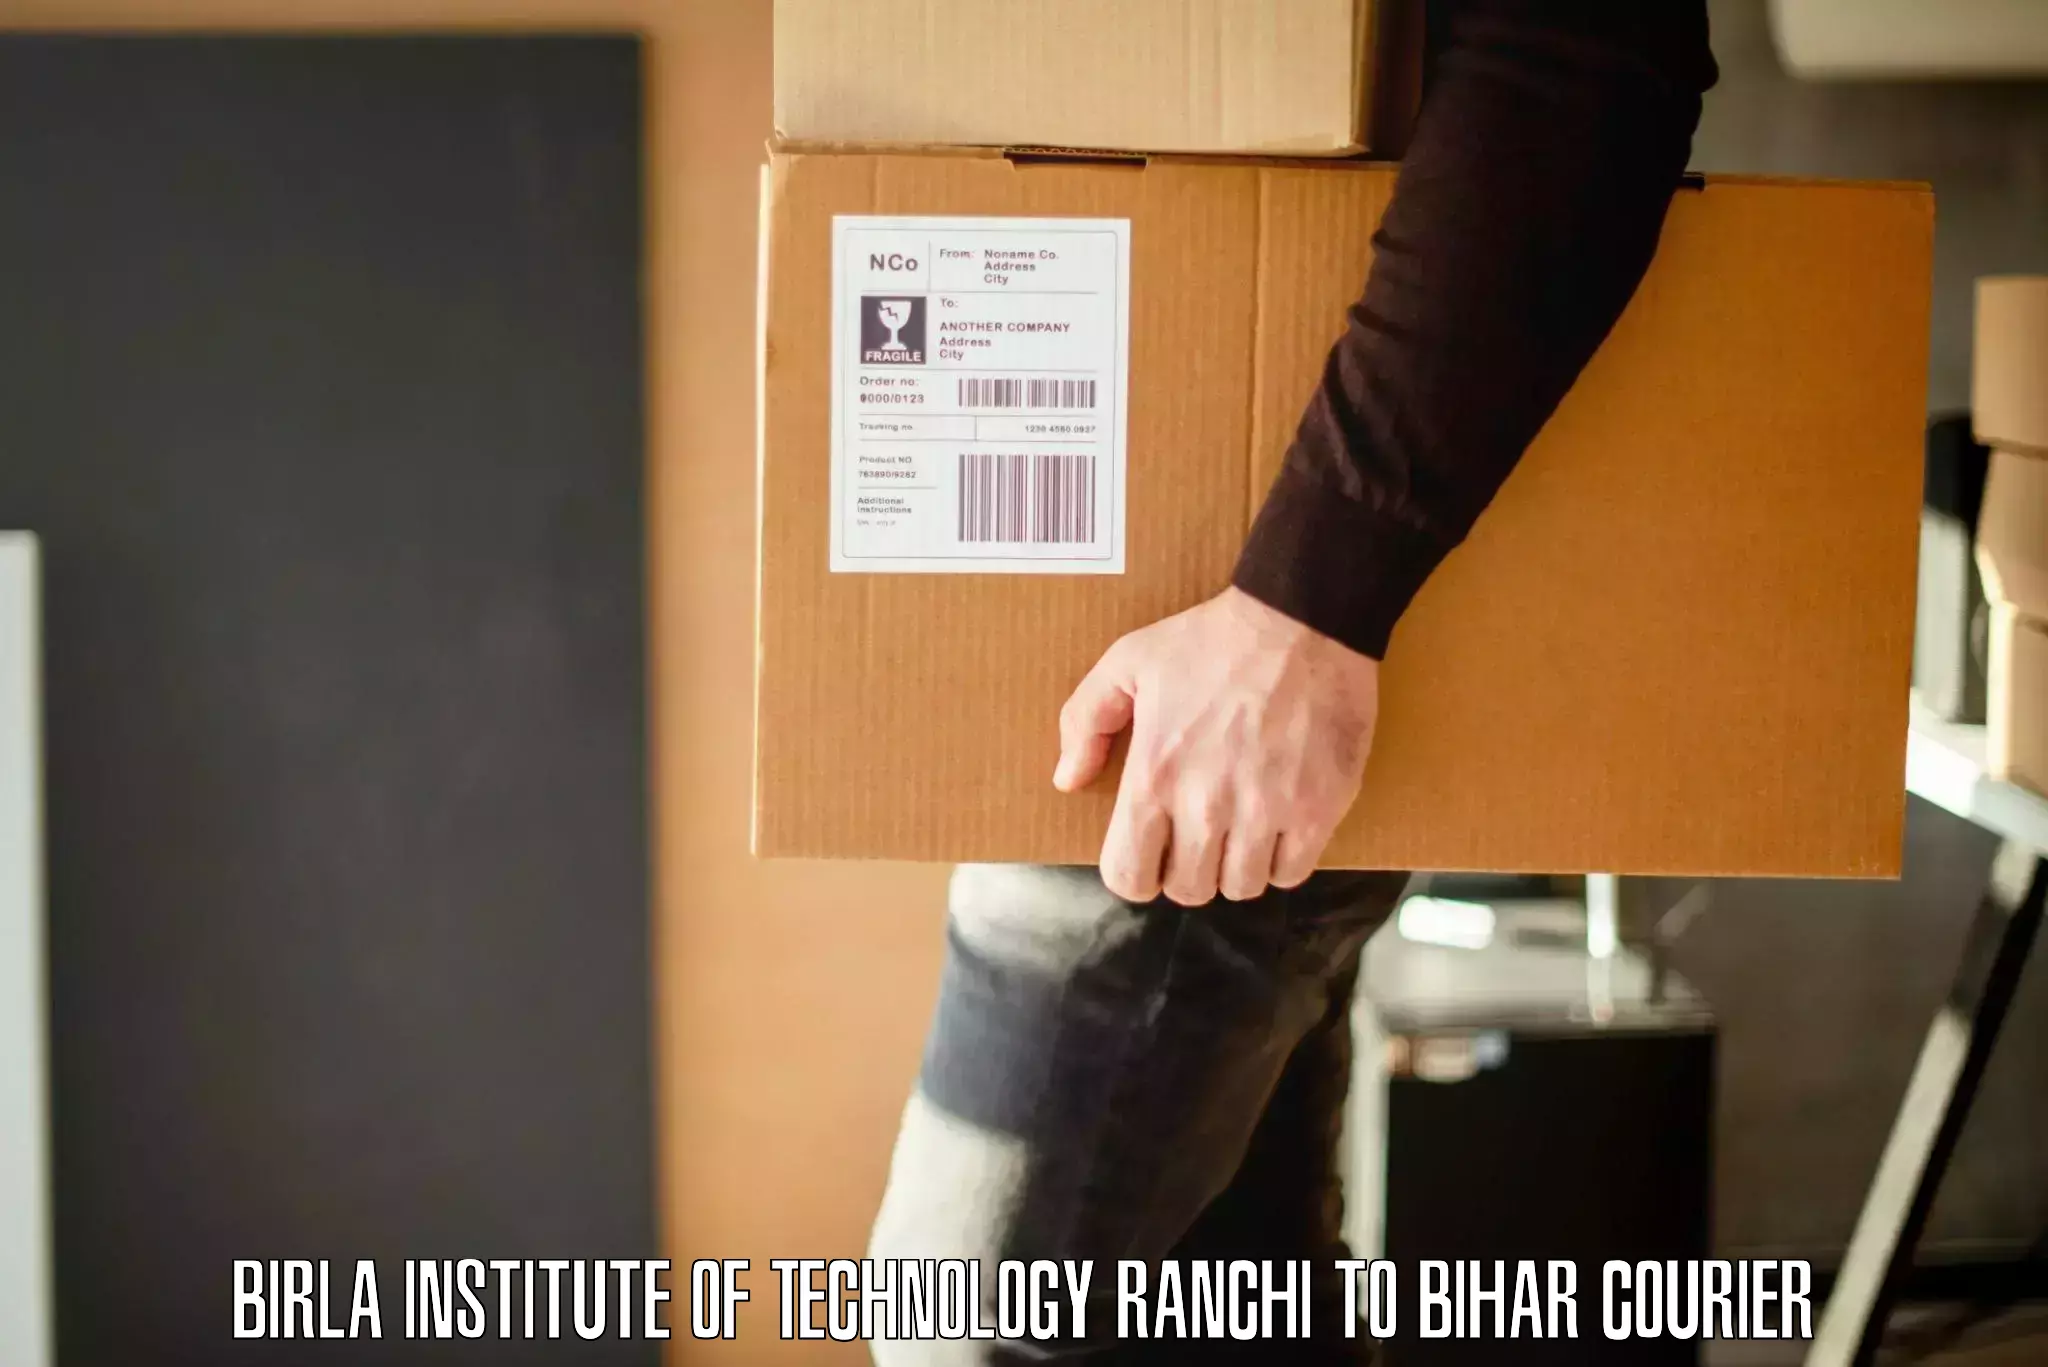 Home goods moving company Birla Institute of Technology Ranchi to Bihar Sharif